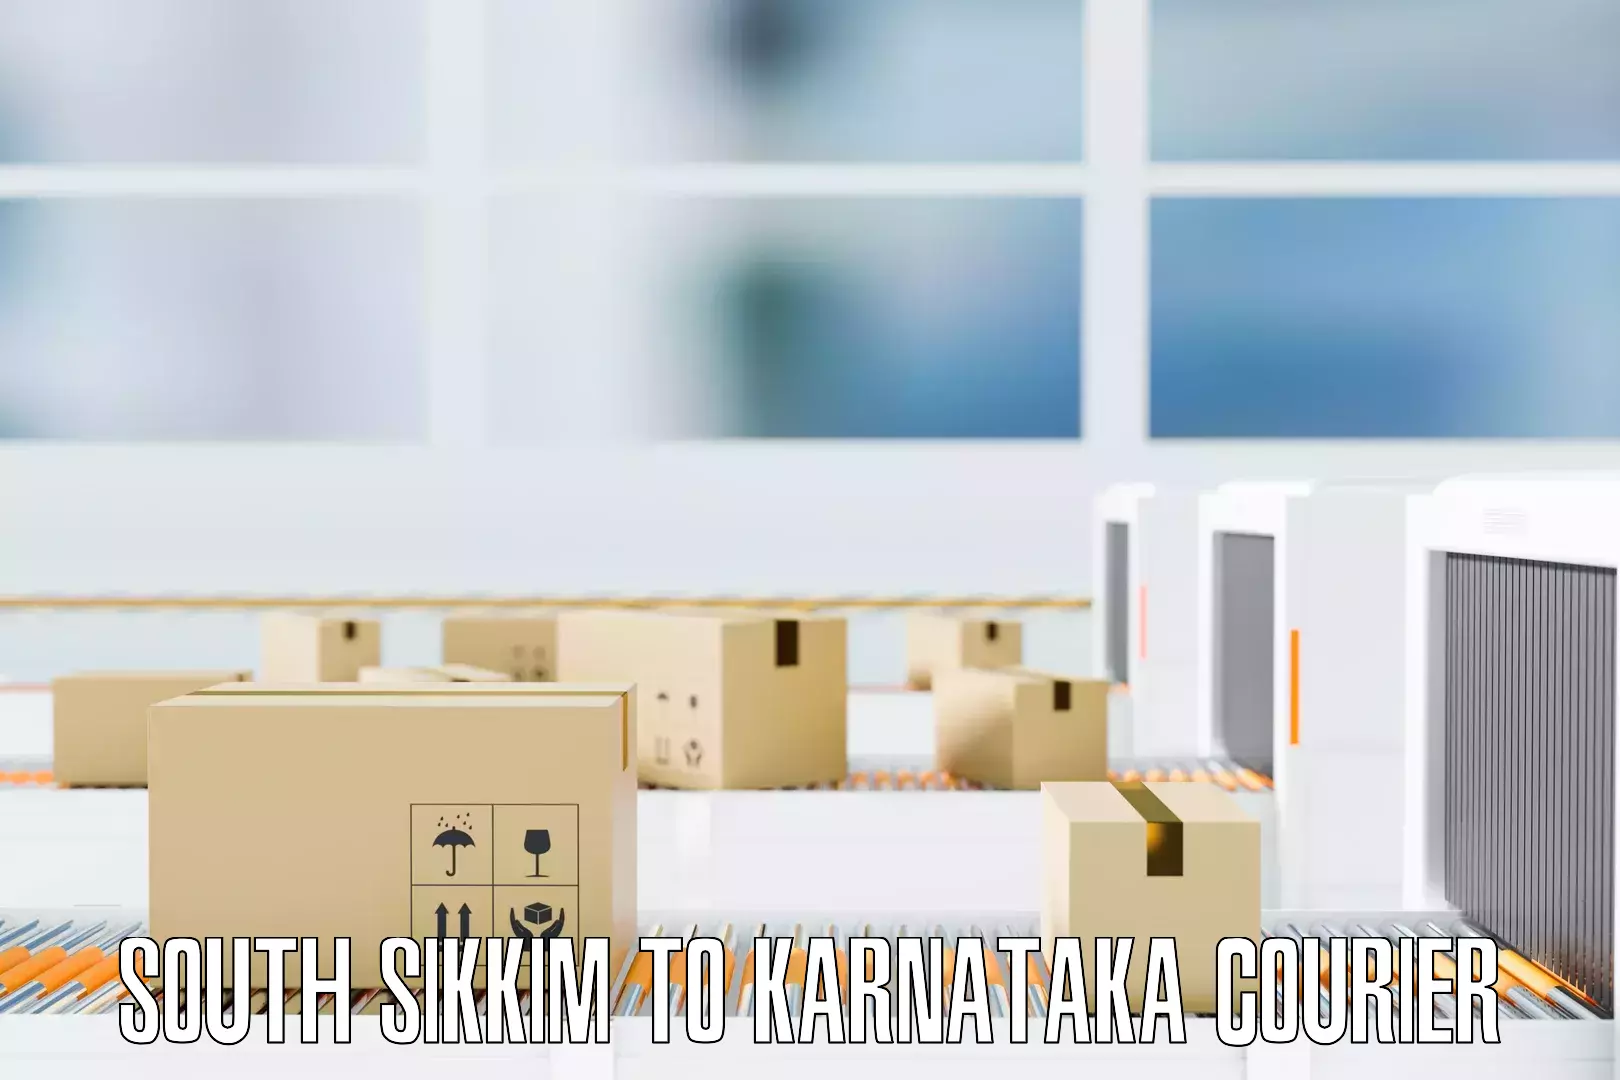 Expert moving and storage South Sikkim to Karnataka